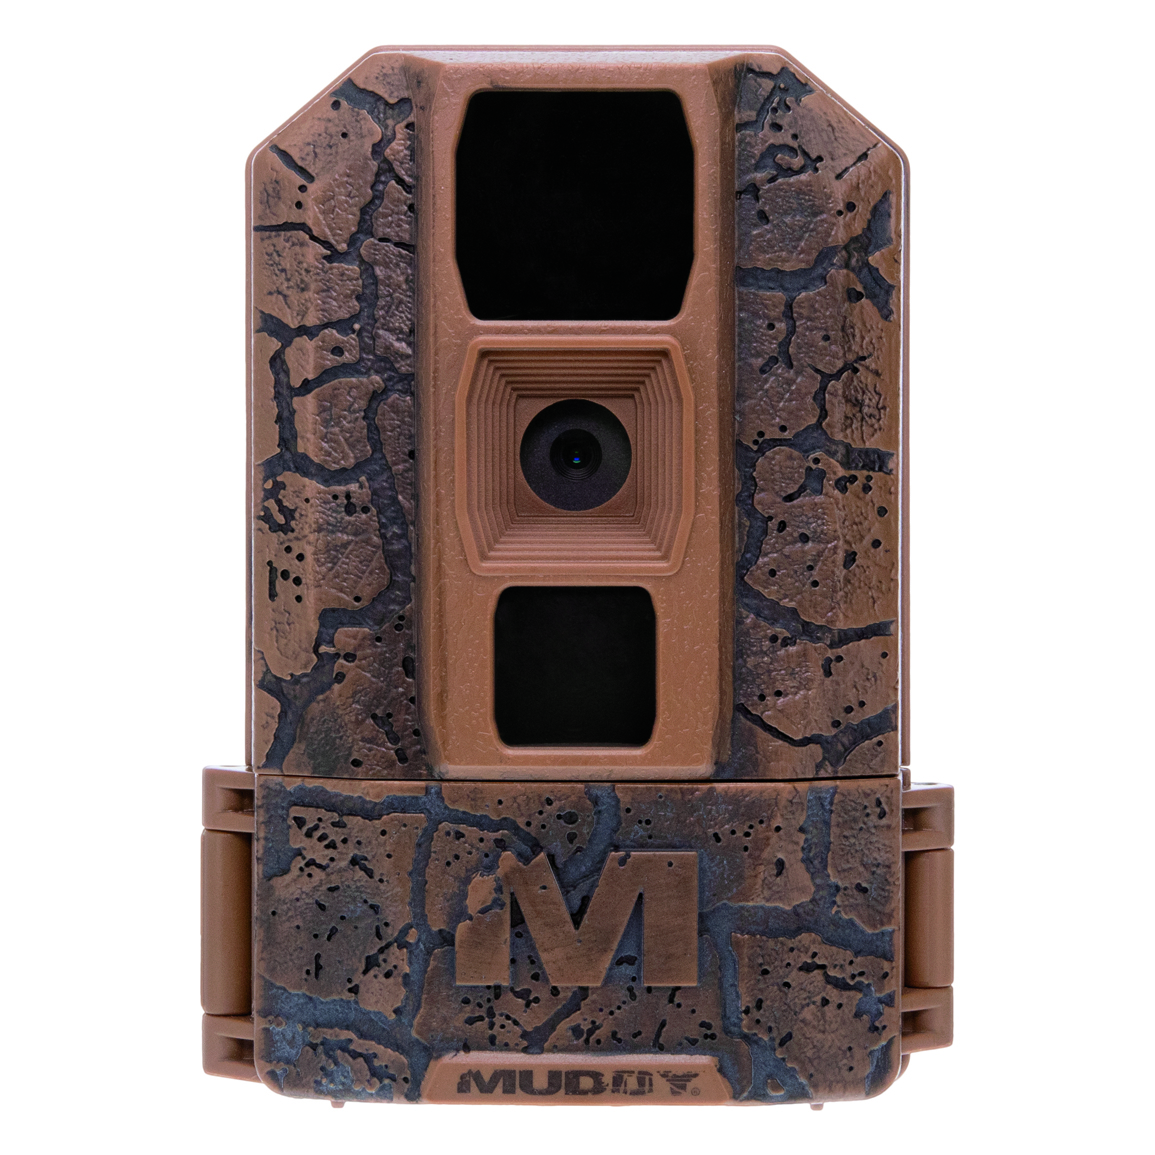 Muddy 16MP Trail Cameras, 4 Pack